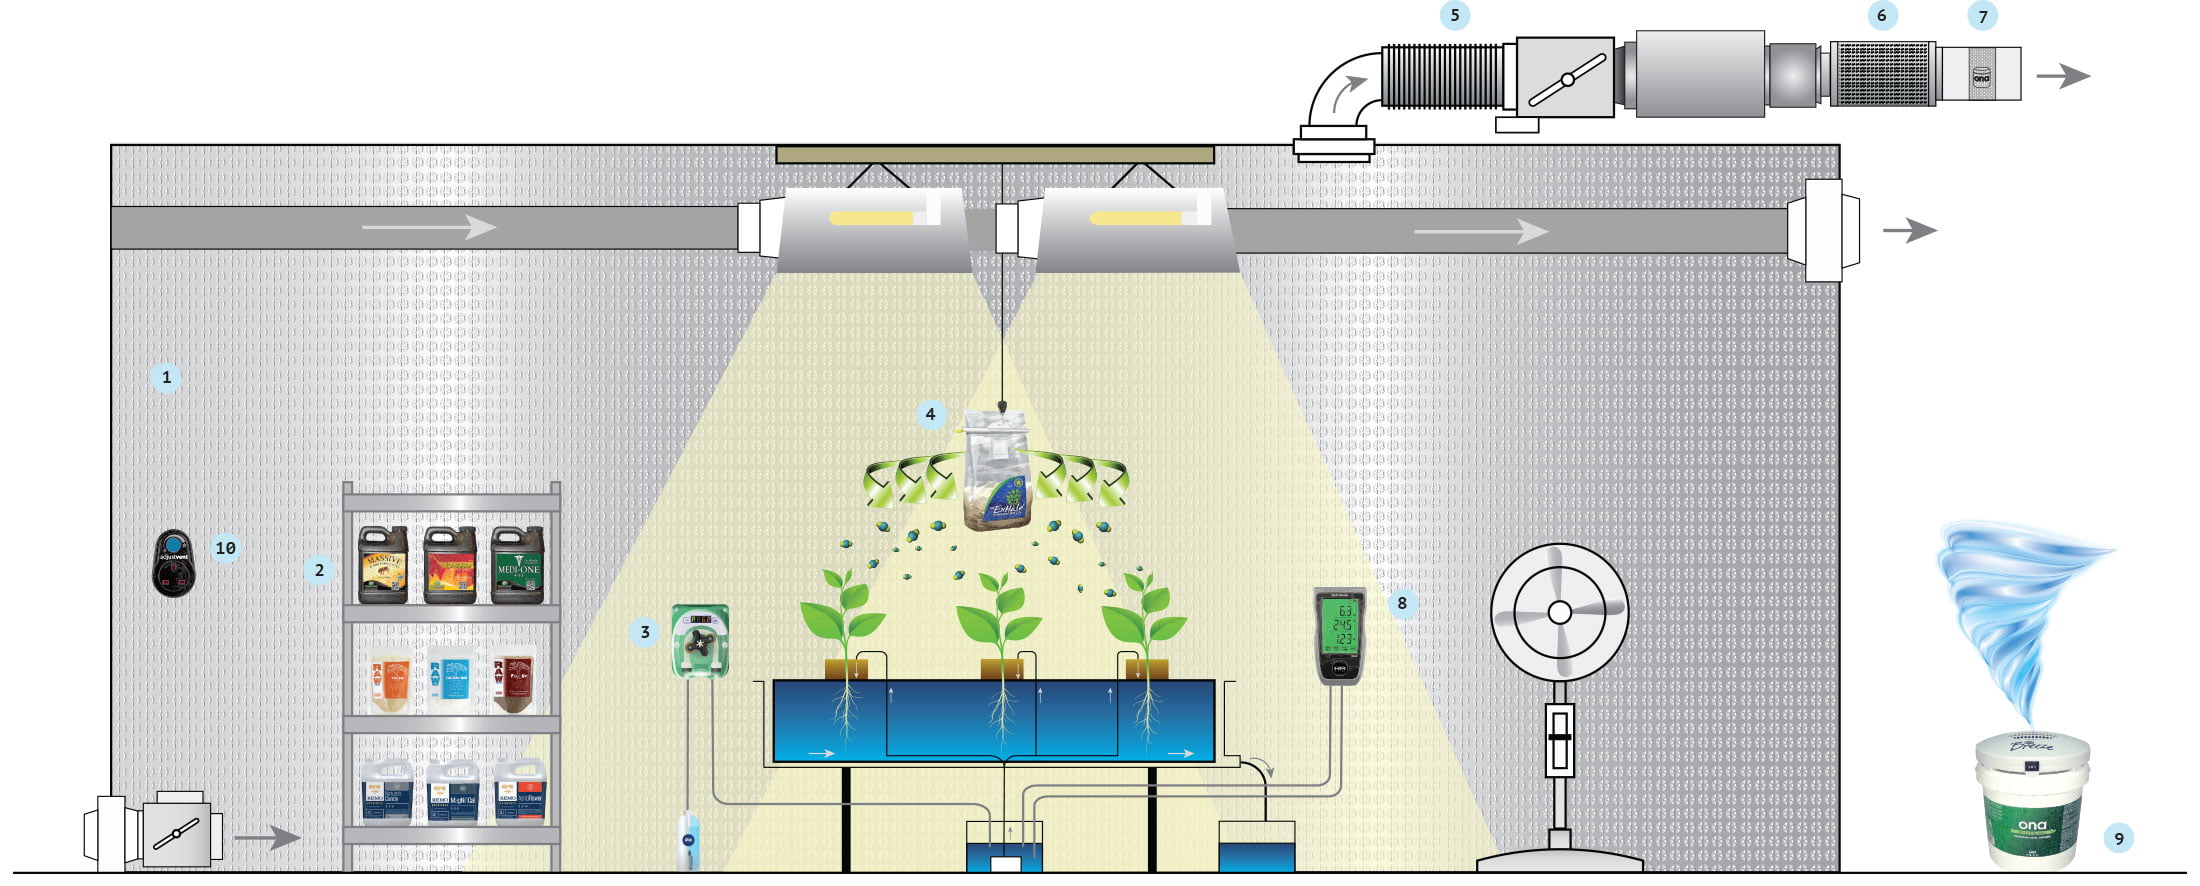 hydroponics grow room - how to set up a hydroponics grow room